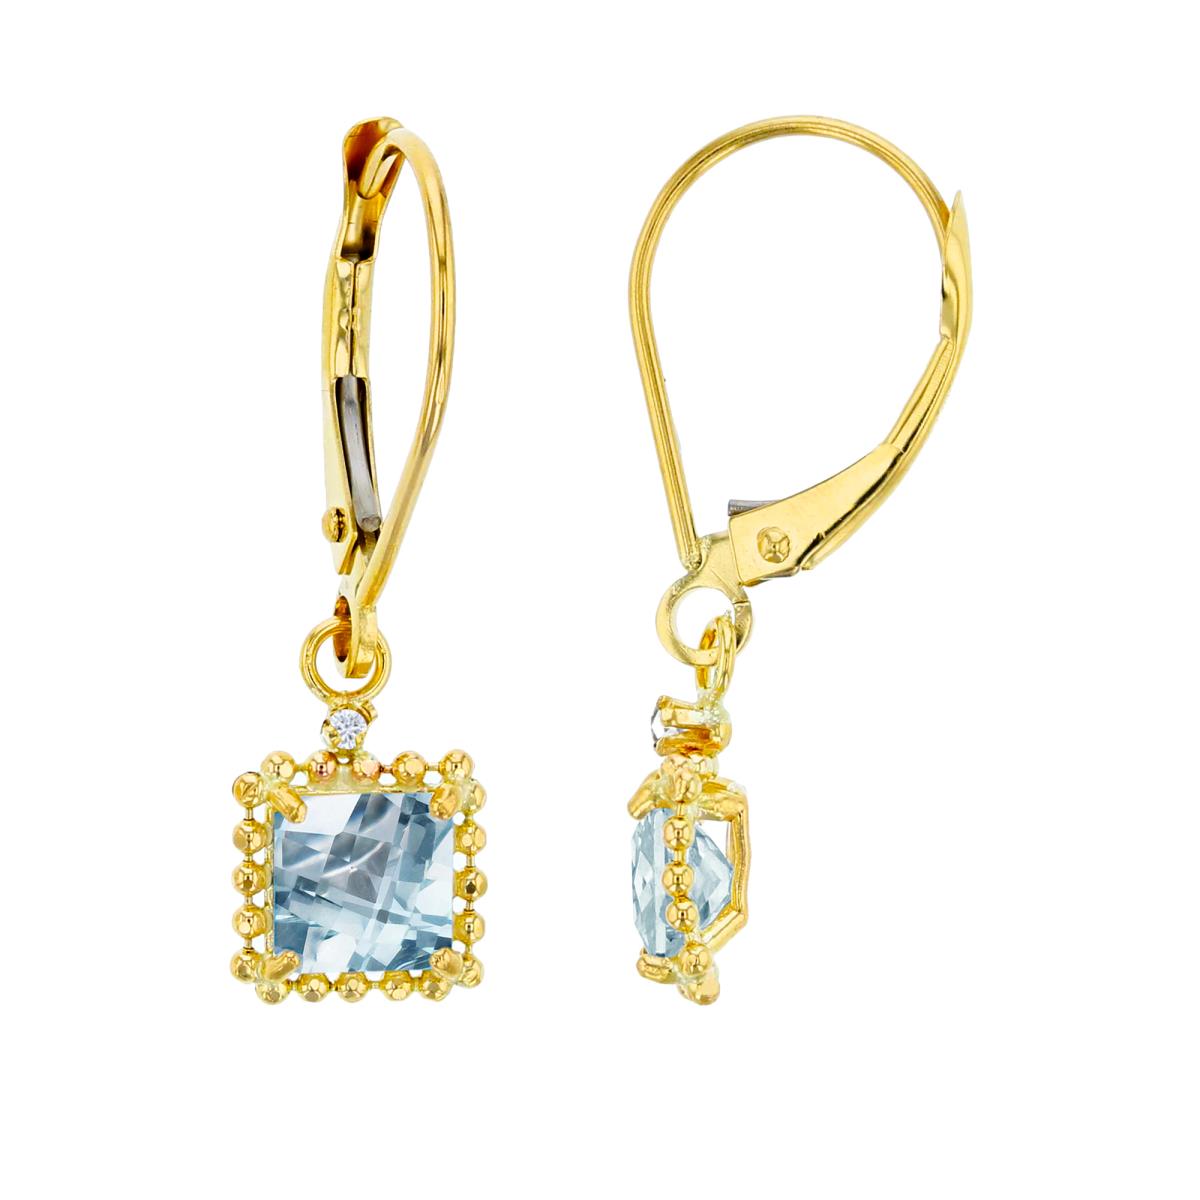 10K Yellow Gold 1.25mm Rd Created White Sapphire & 5mm Sq Aquamarine Bead Frame Drop Lever-Back Earring